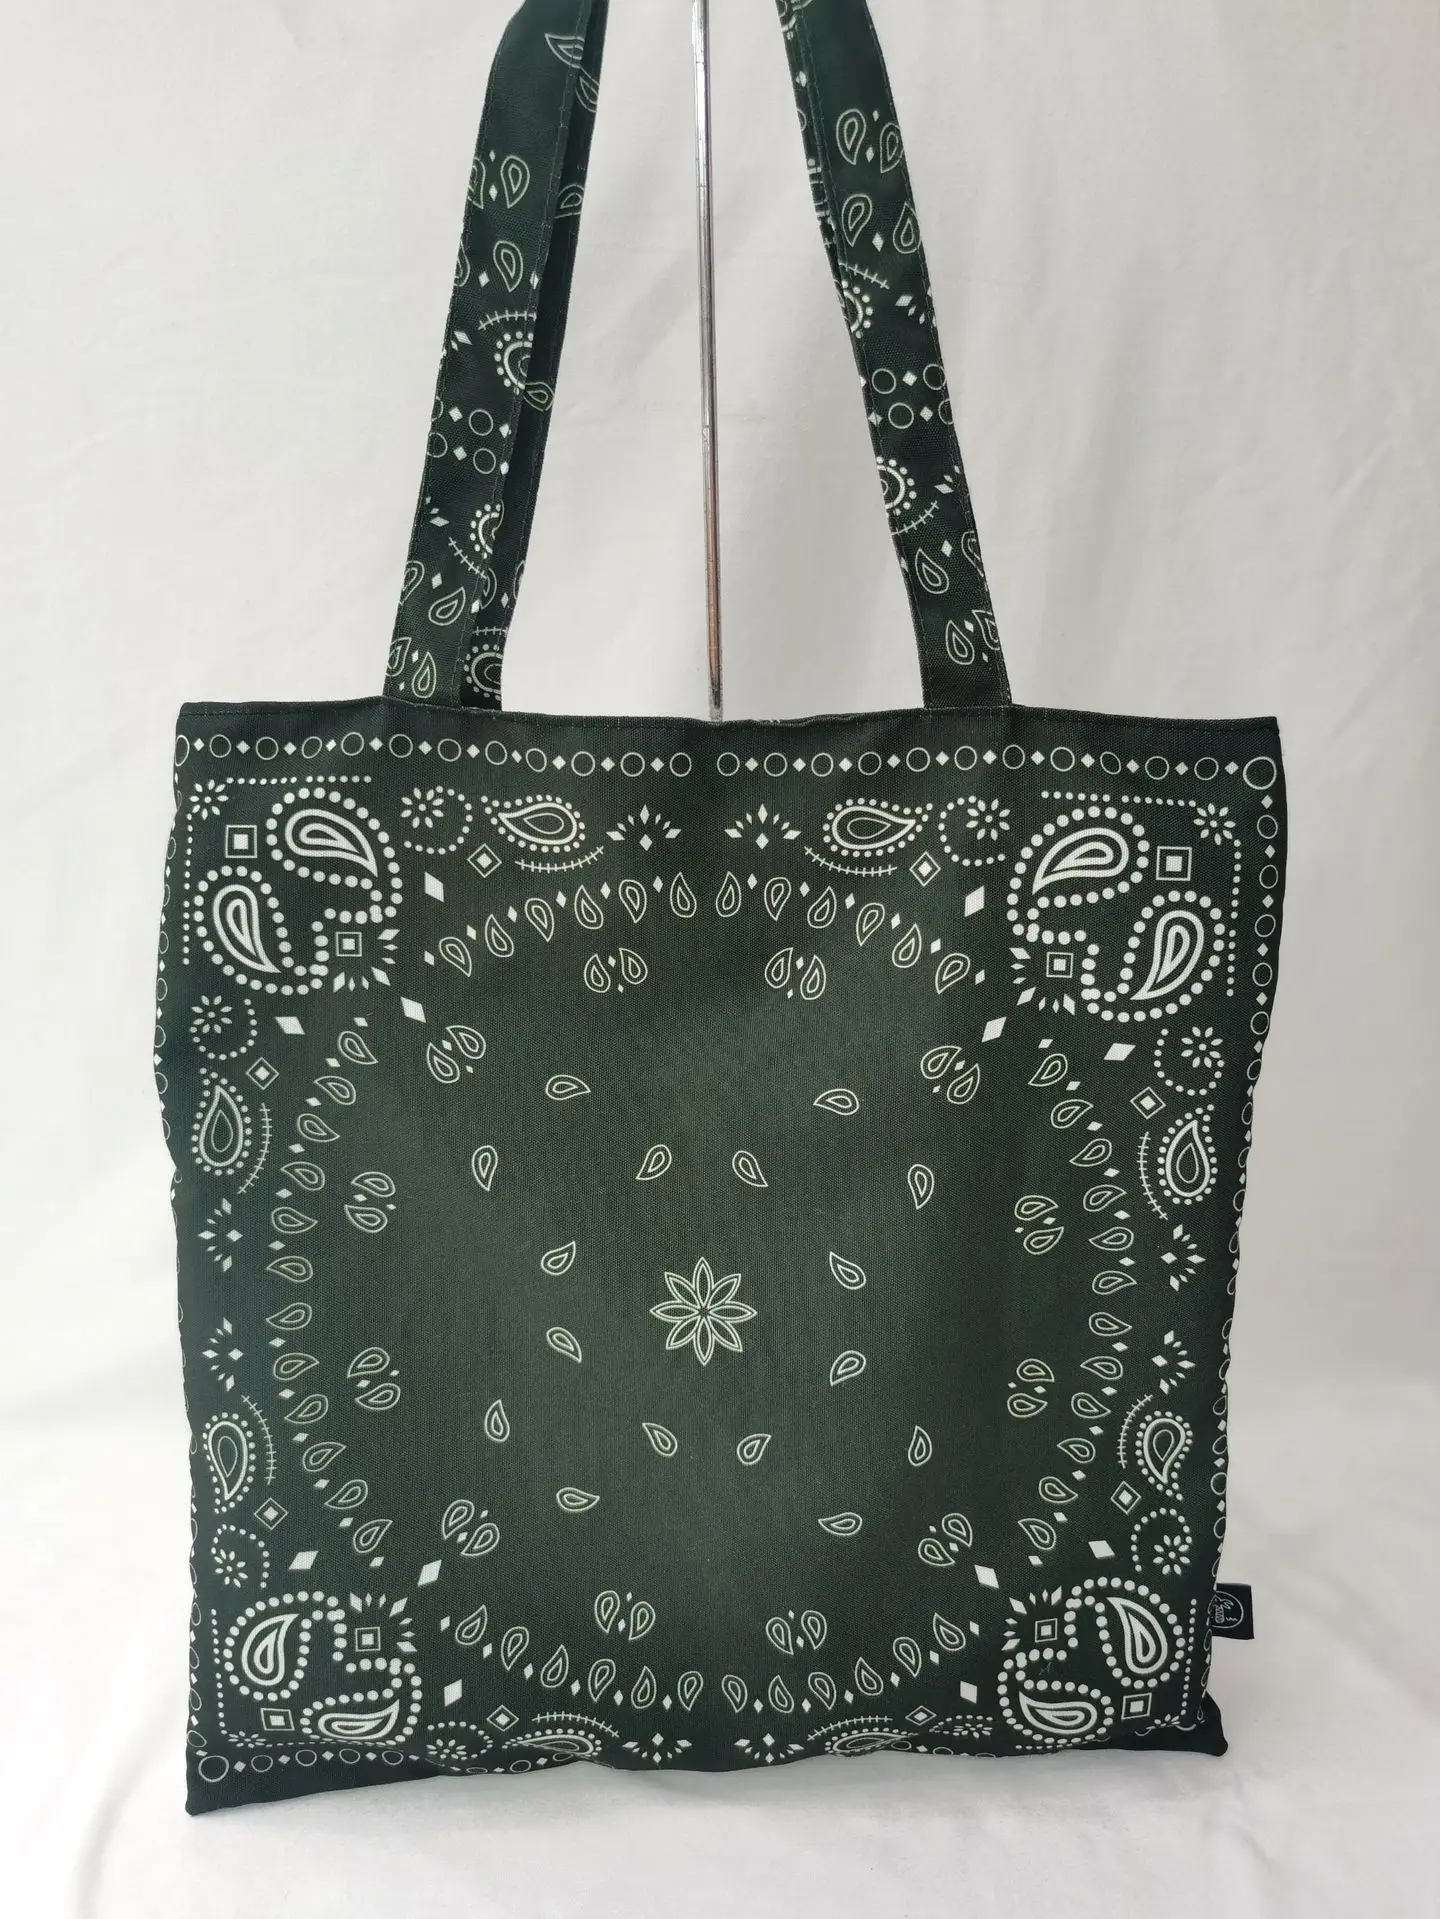 I Pattern Original Floral Water Resistant Large Tote Bag Shoulder Bag for Gym Beach Travel Daily Bags Upgraded 